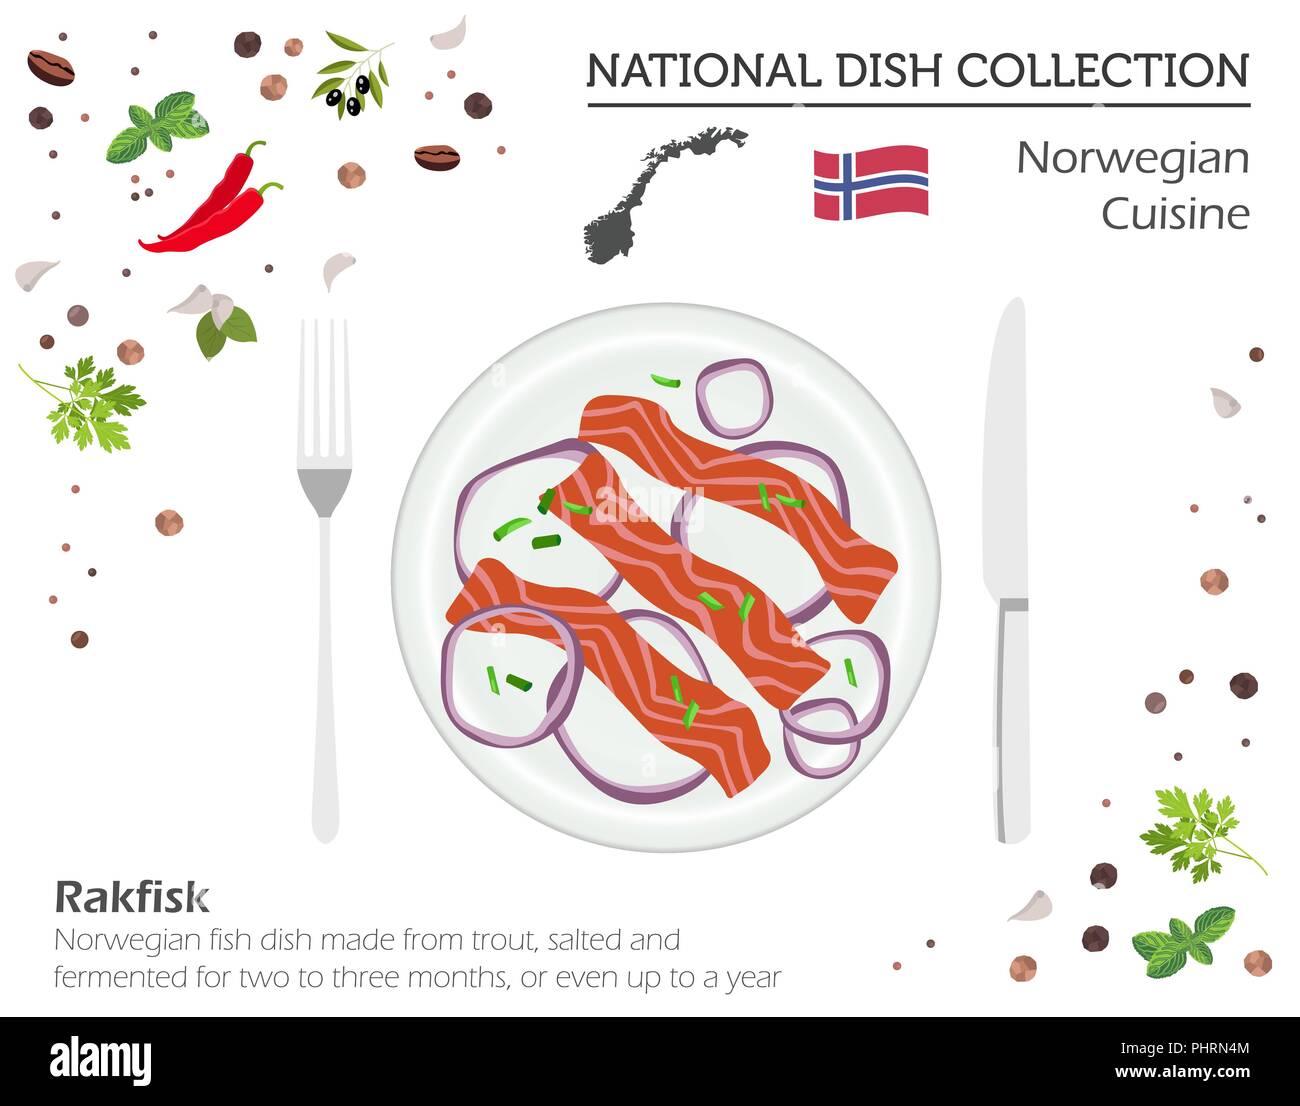 Norwegian Cuisine. European national dish collection.  Rakfisk isolated on white, infographic. Vector illustration Stock Vector